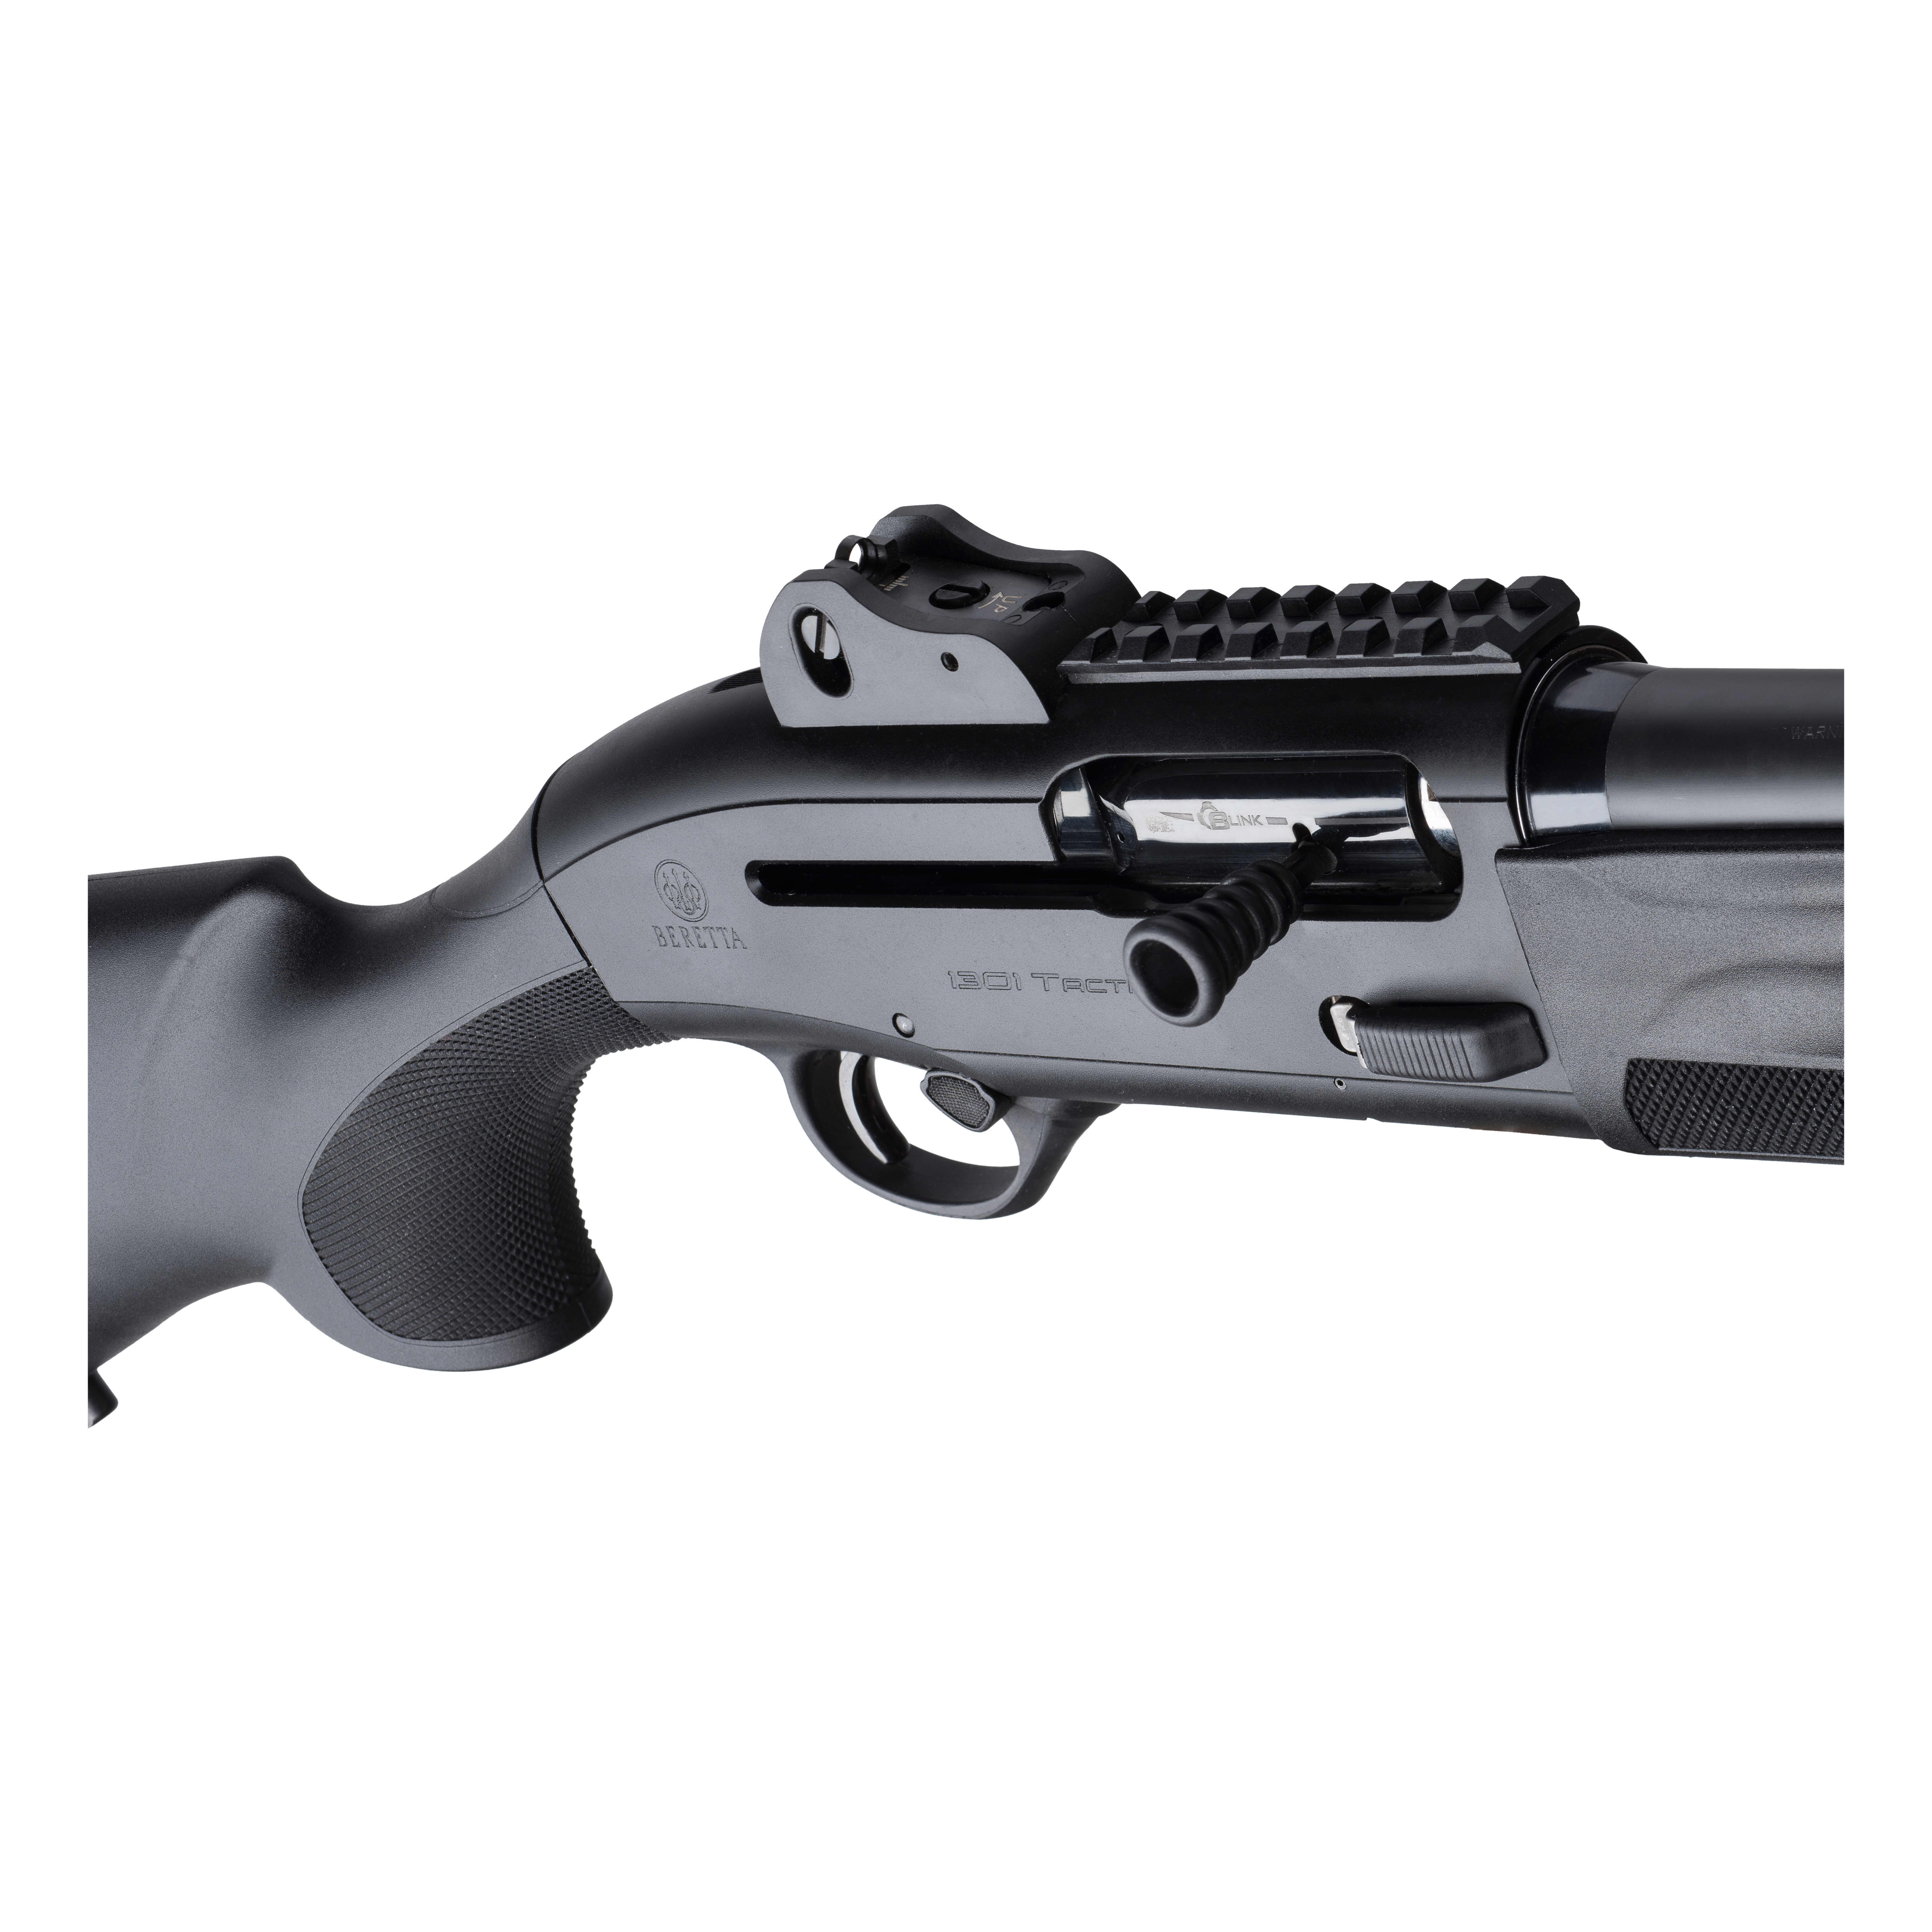 Beretta® 1301 Tactical Gen2 Semi-Automatic Shotgun